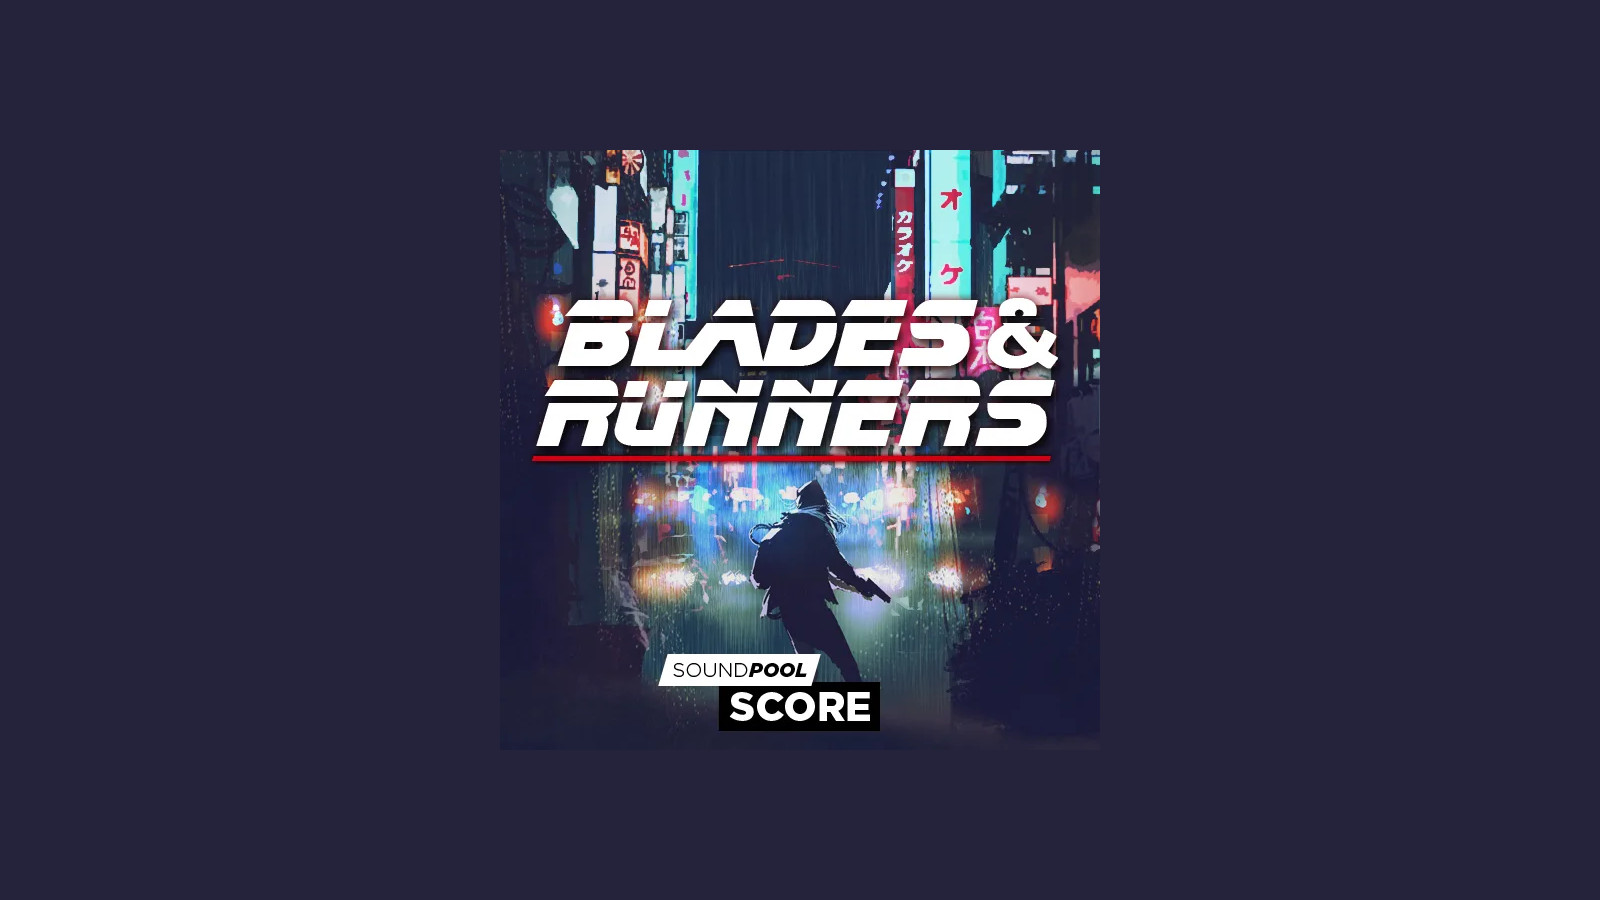 MAGIX Soundpool Blades & Runners ProducerPlanet CD Key $5.65